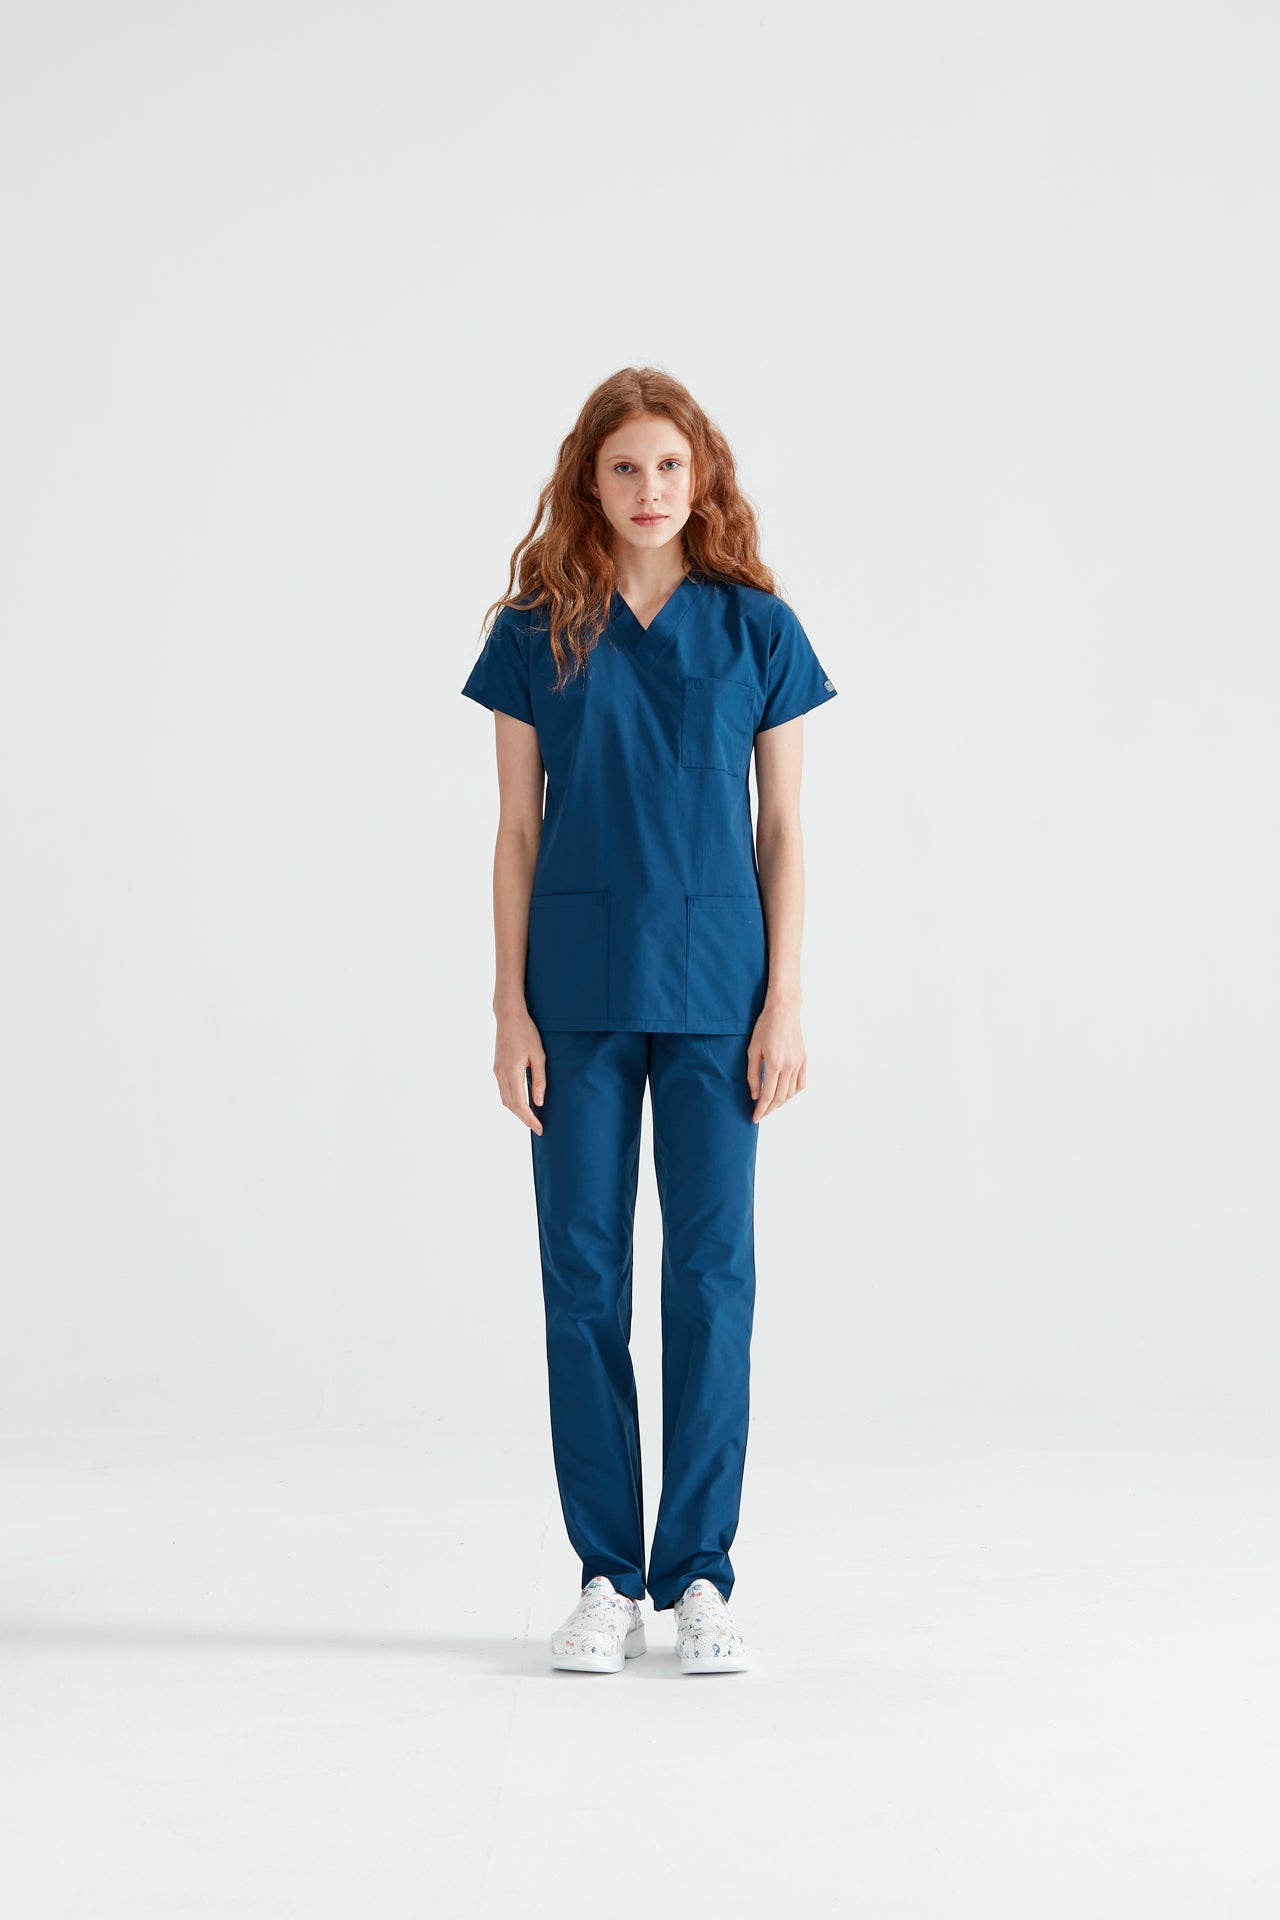 Costum Medical Albastru Indigo, Pentru Femei - Model Classic